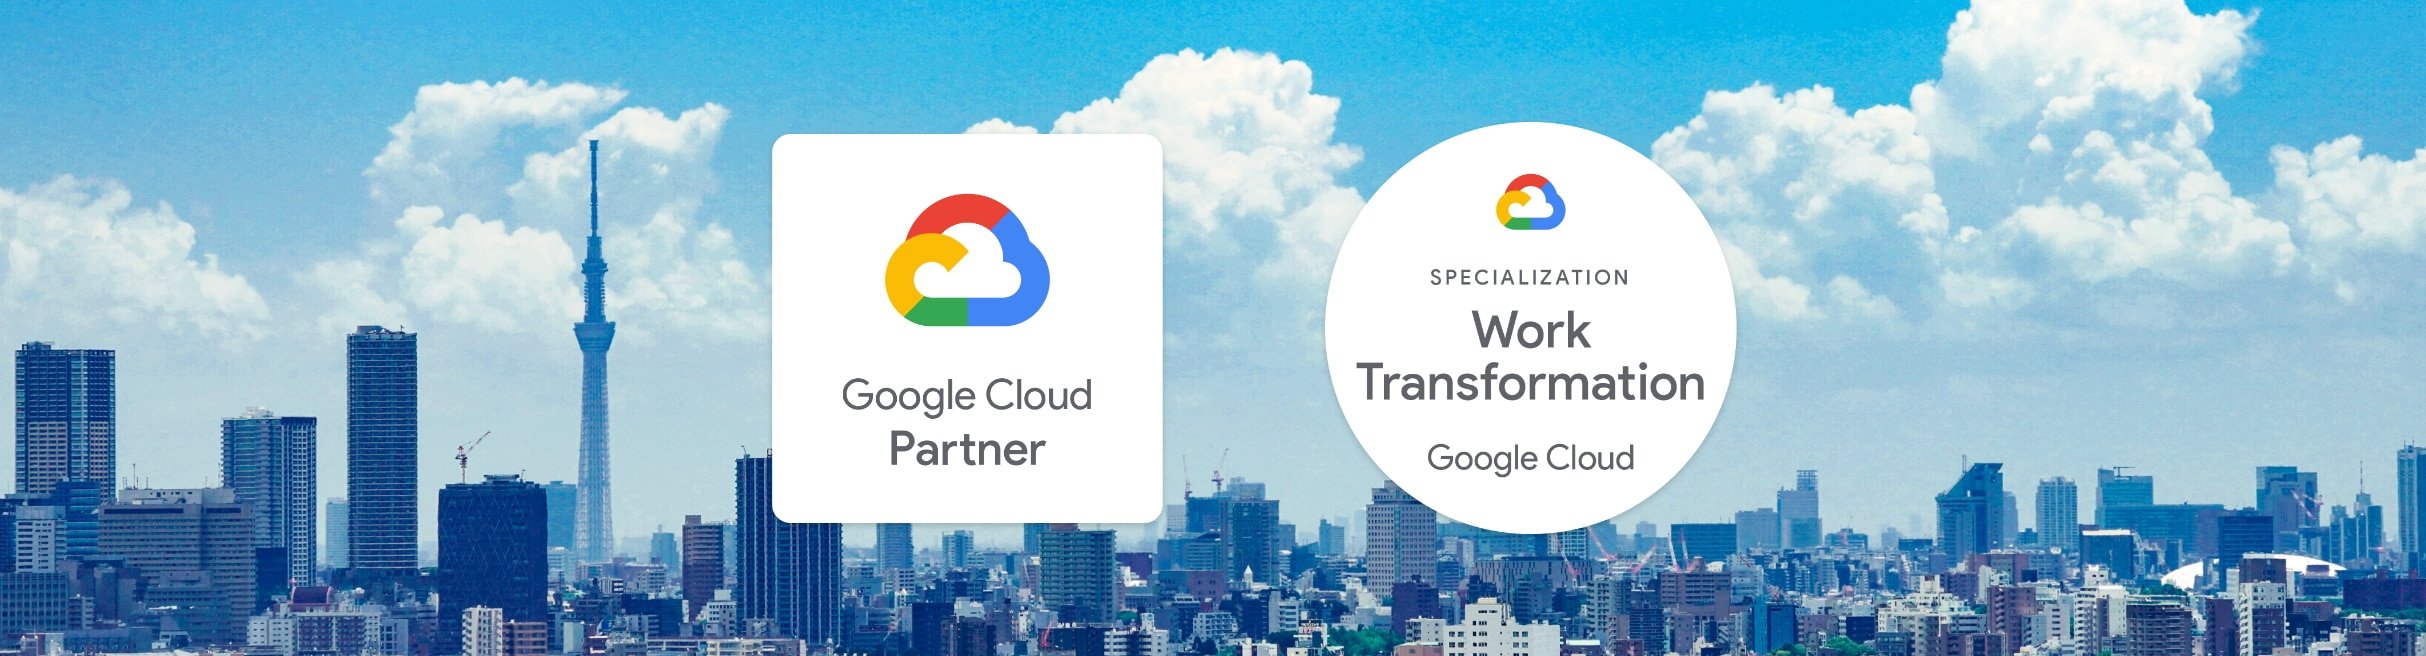 Google Cloud Partner  Work Transformation